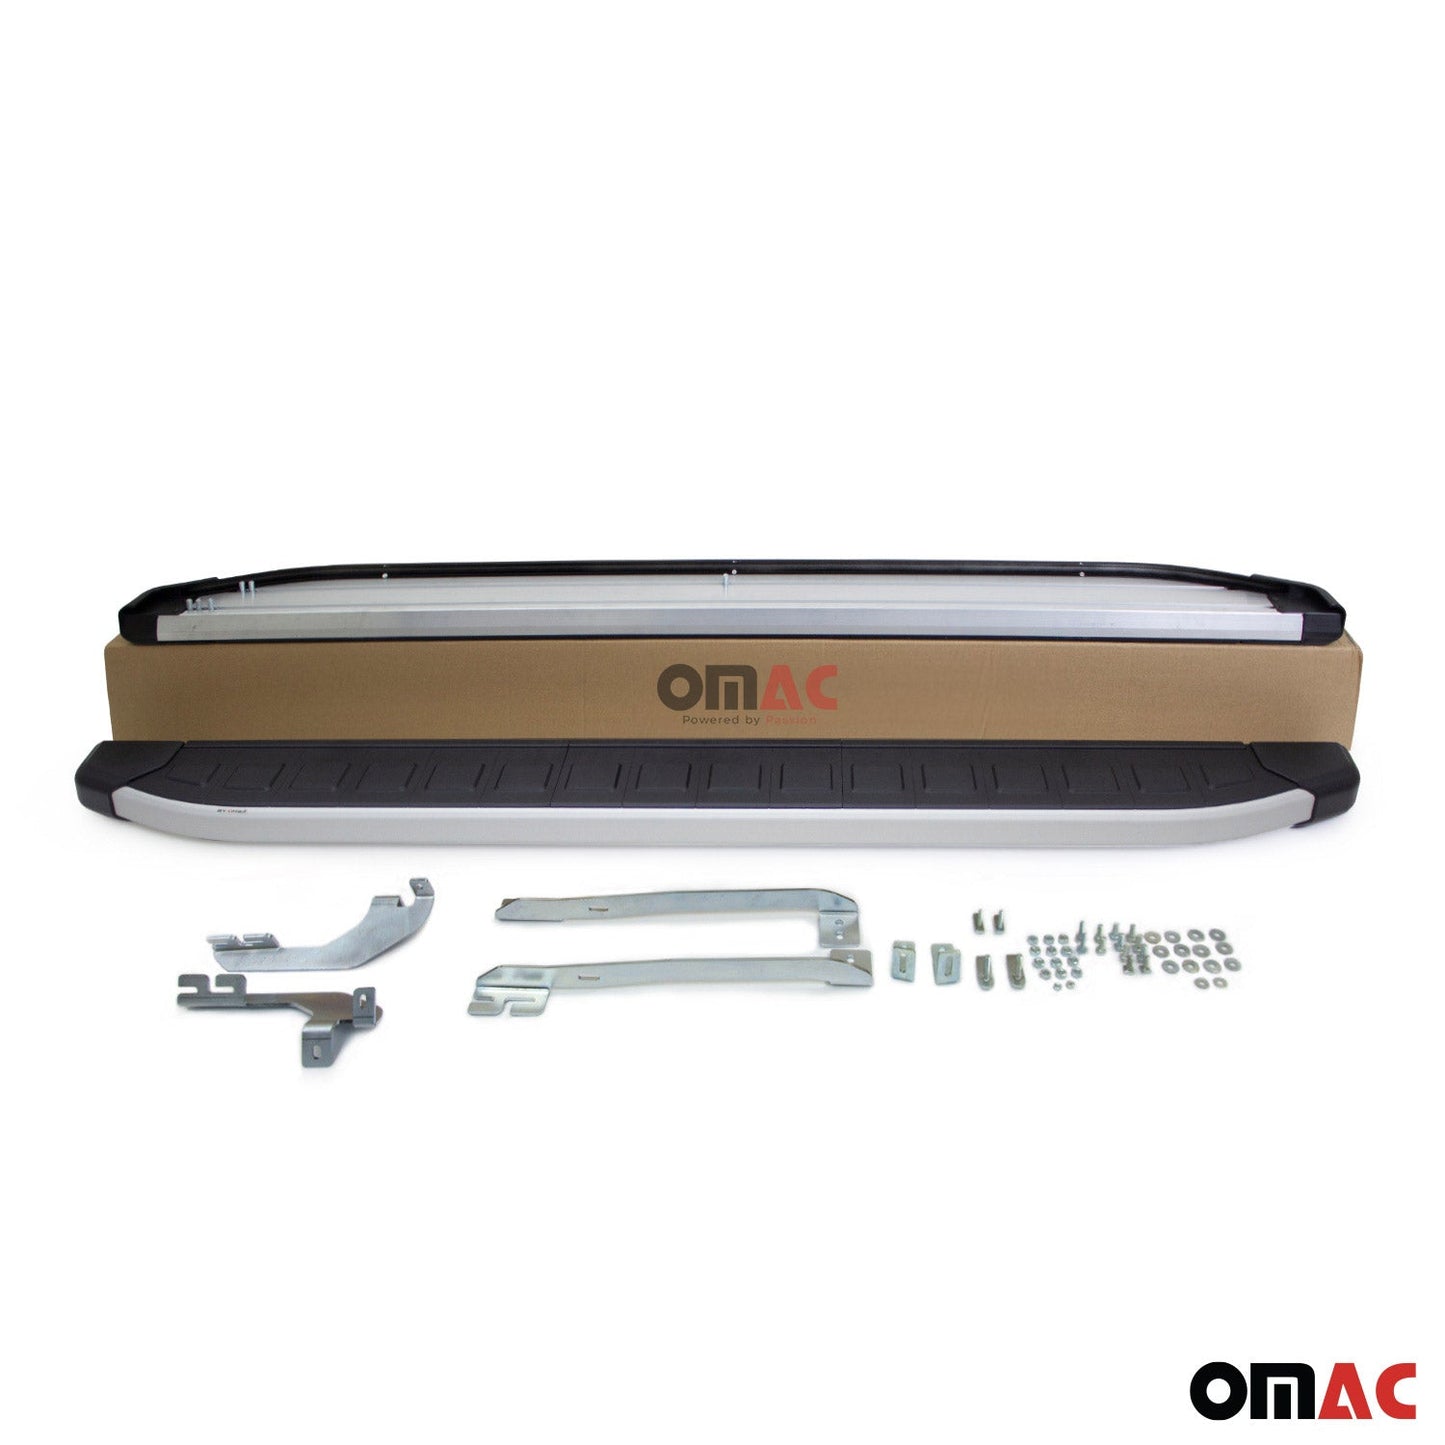 OMAC Running Boards Fits Chevrolet Captiva 2019-2020 Side Steps Nerf Bars 2 Pcs '1622974